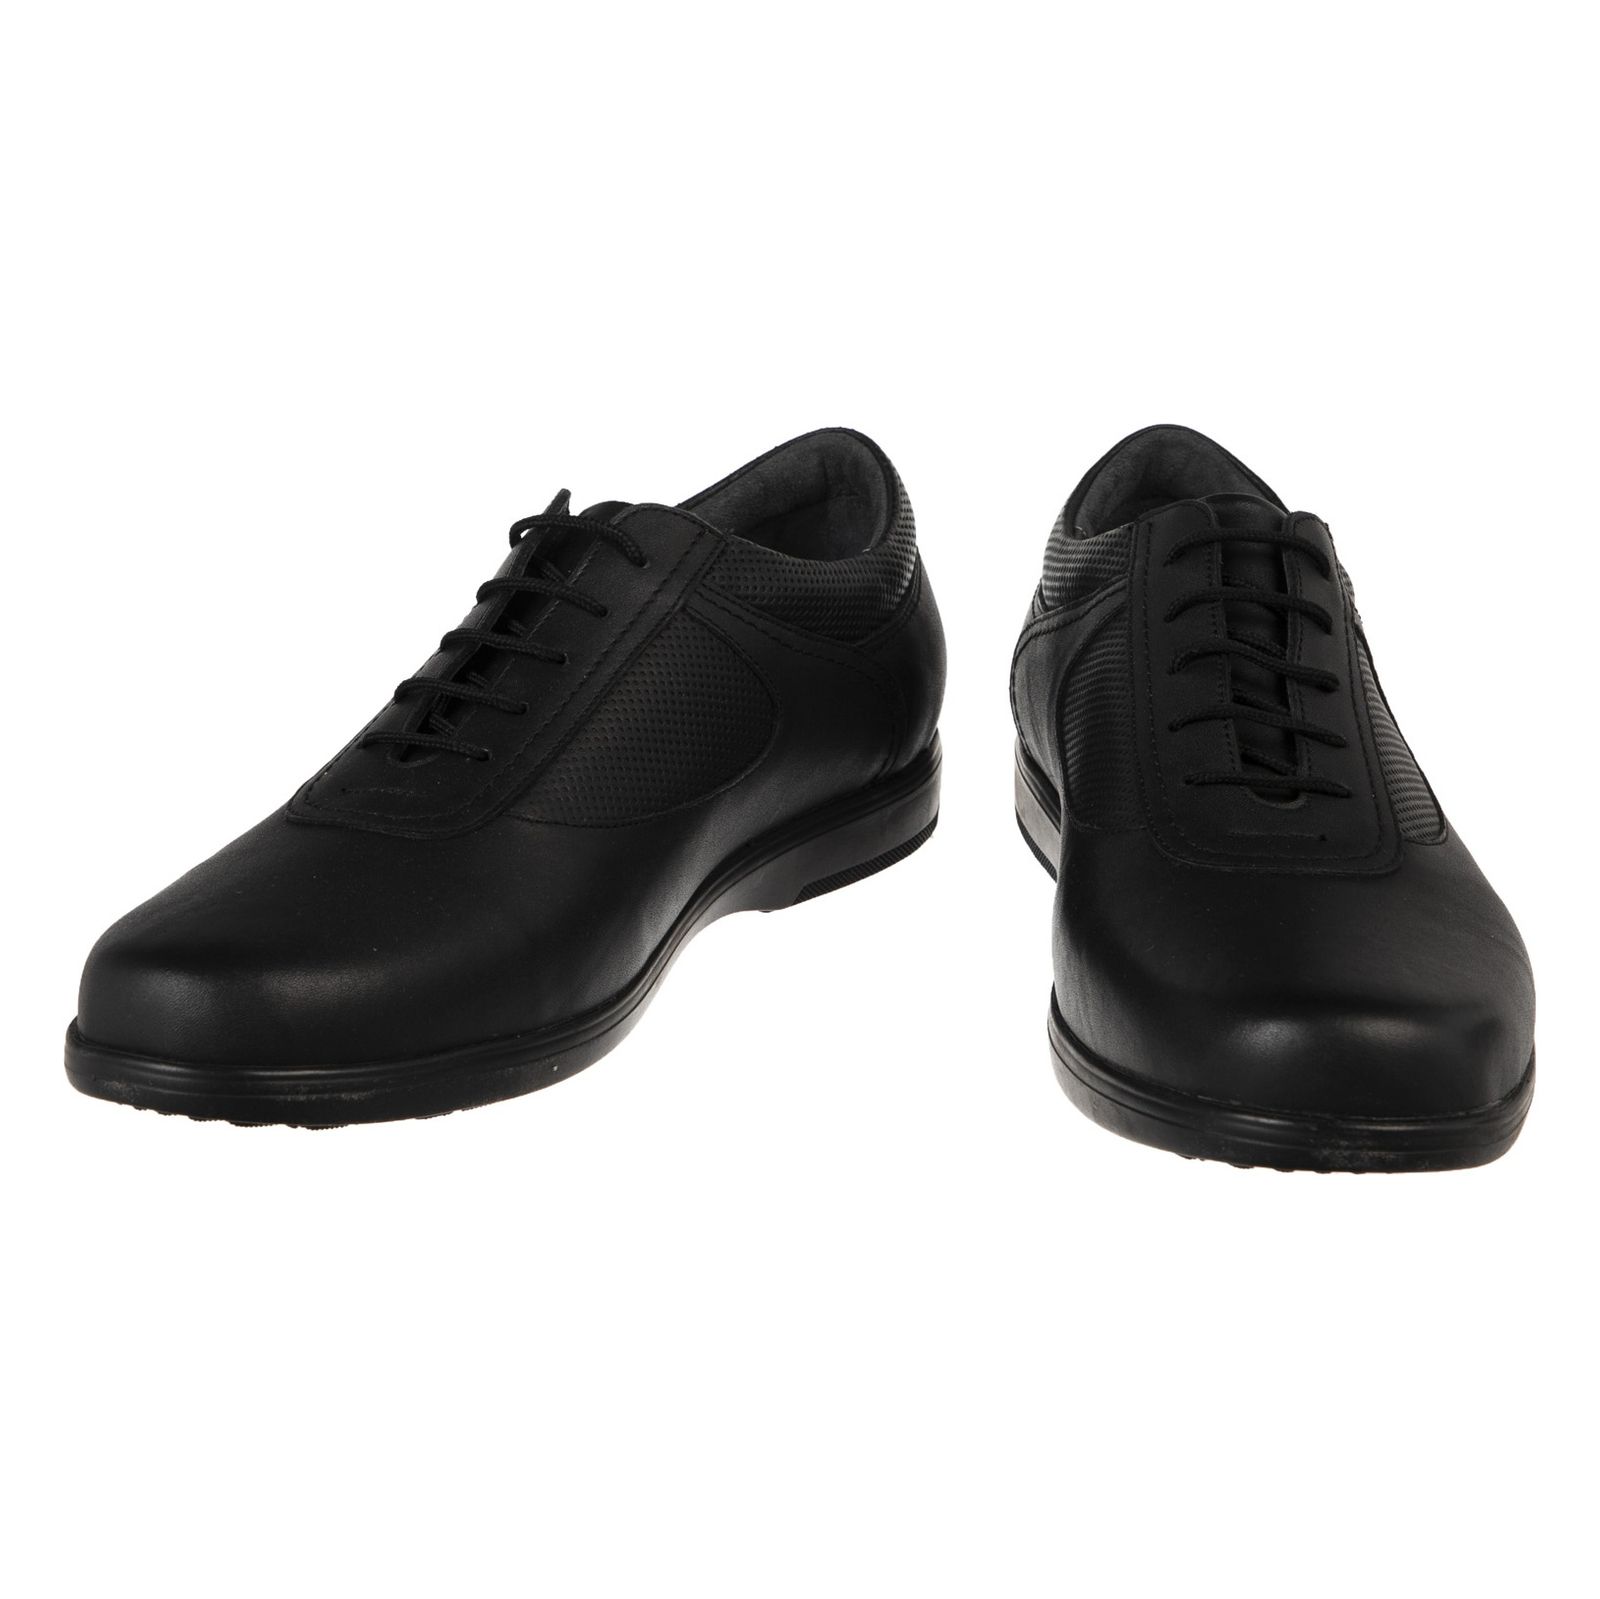 کفش روزمره مردانه دانادل مدل 7001W503101 - مشکی - 5